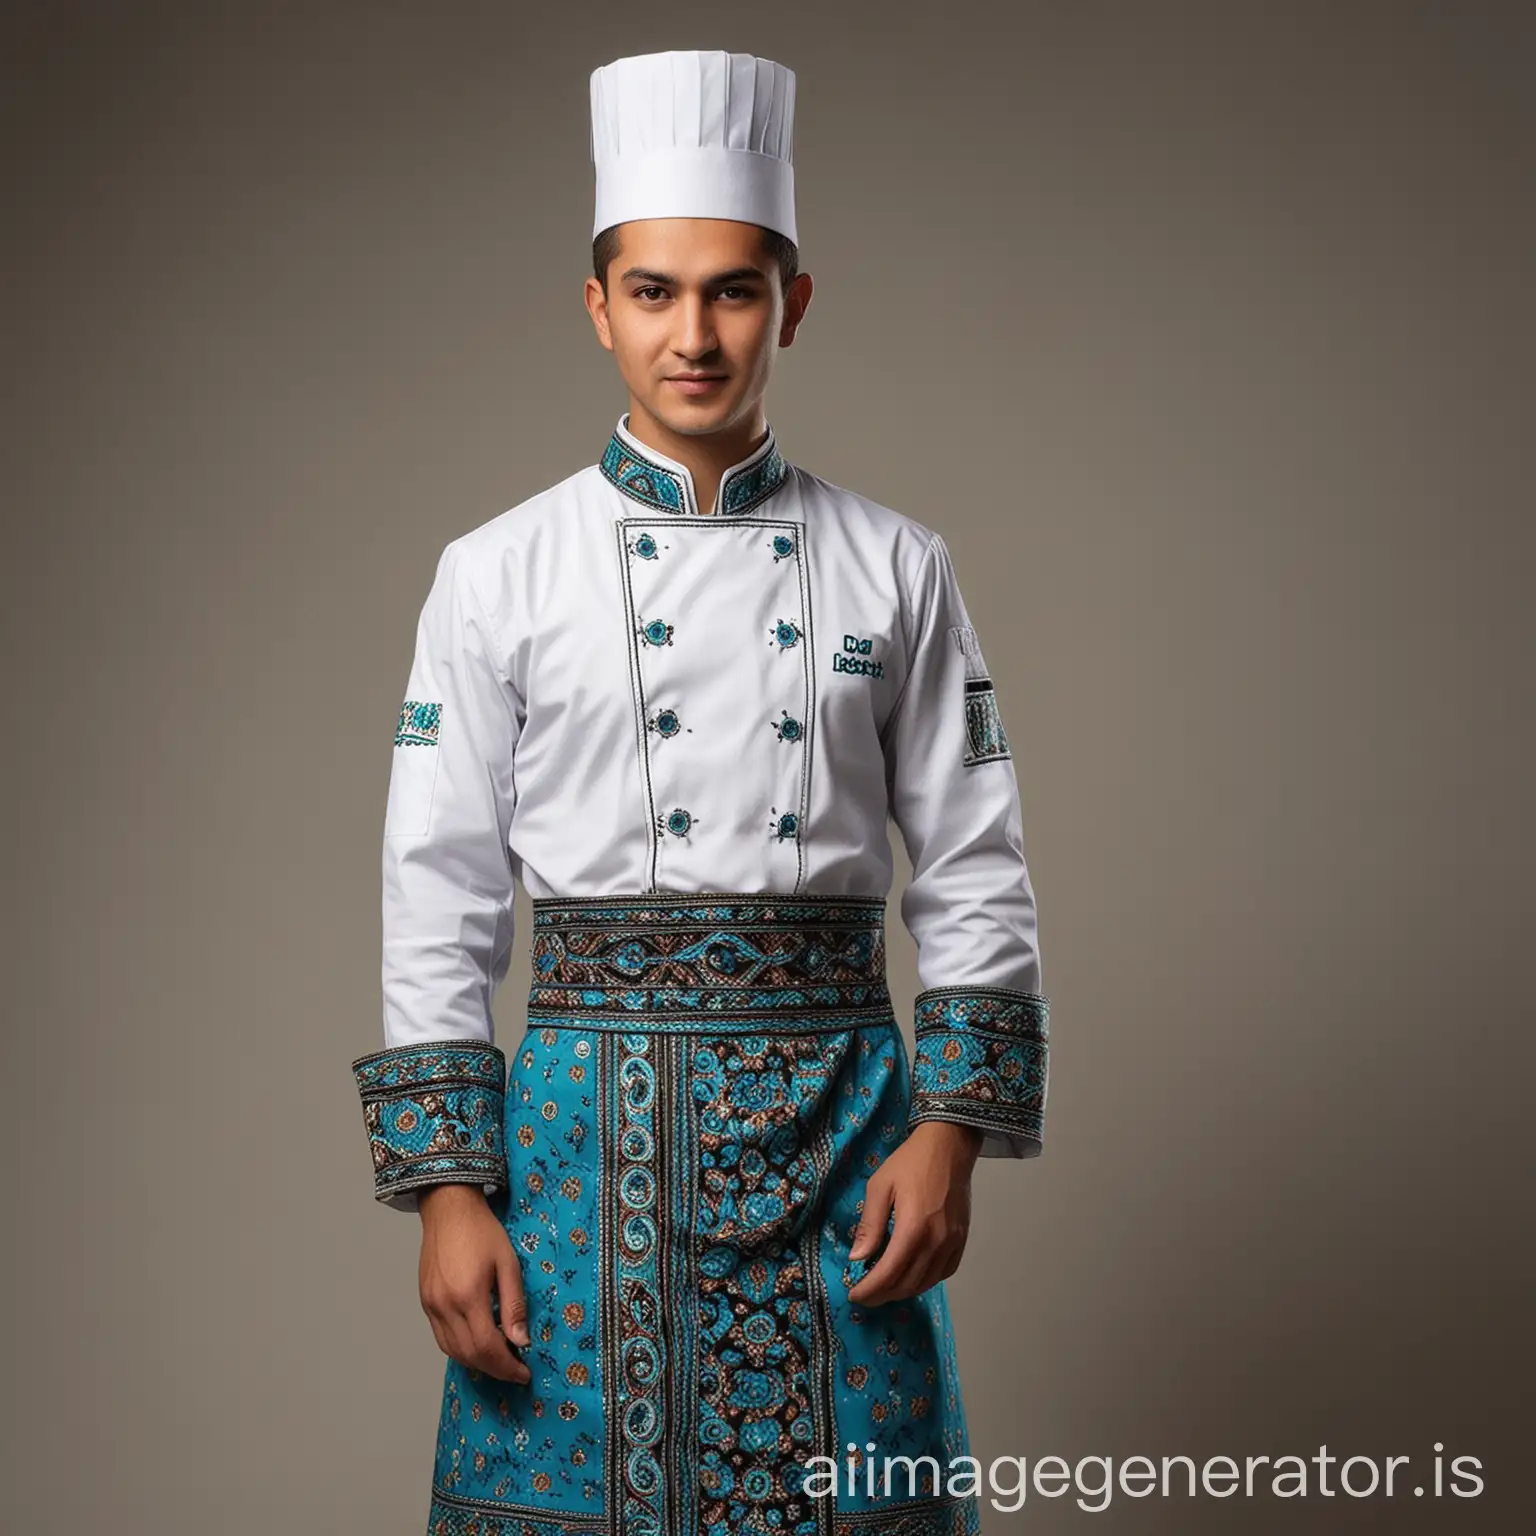 UzbekInspired-Chef-Uniform-with-Traditional-Doppis-for-Doppi-Restaurant